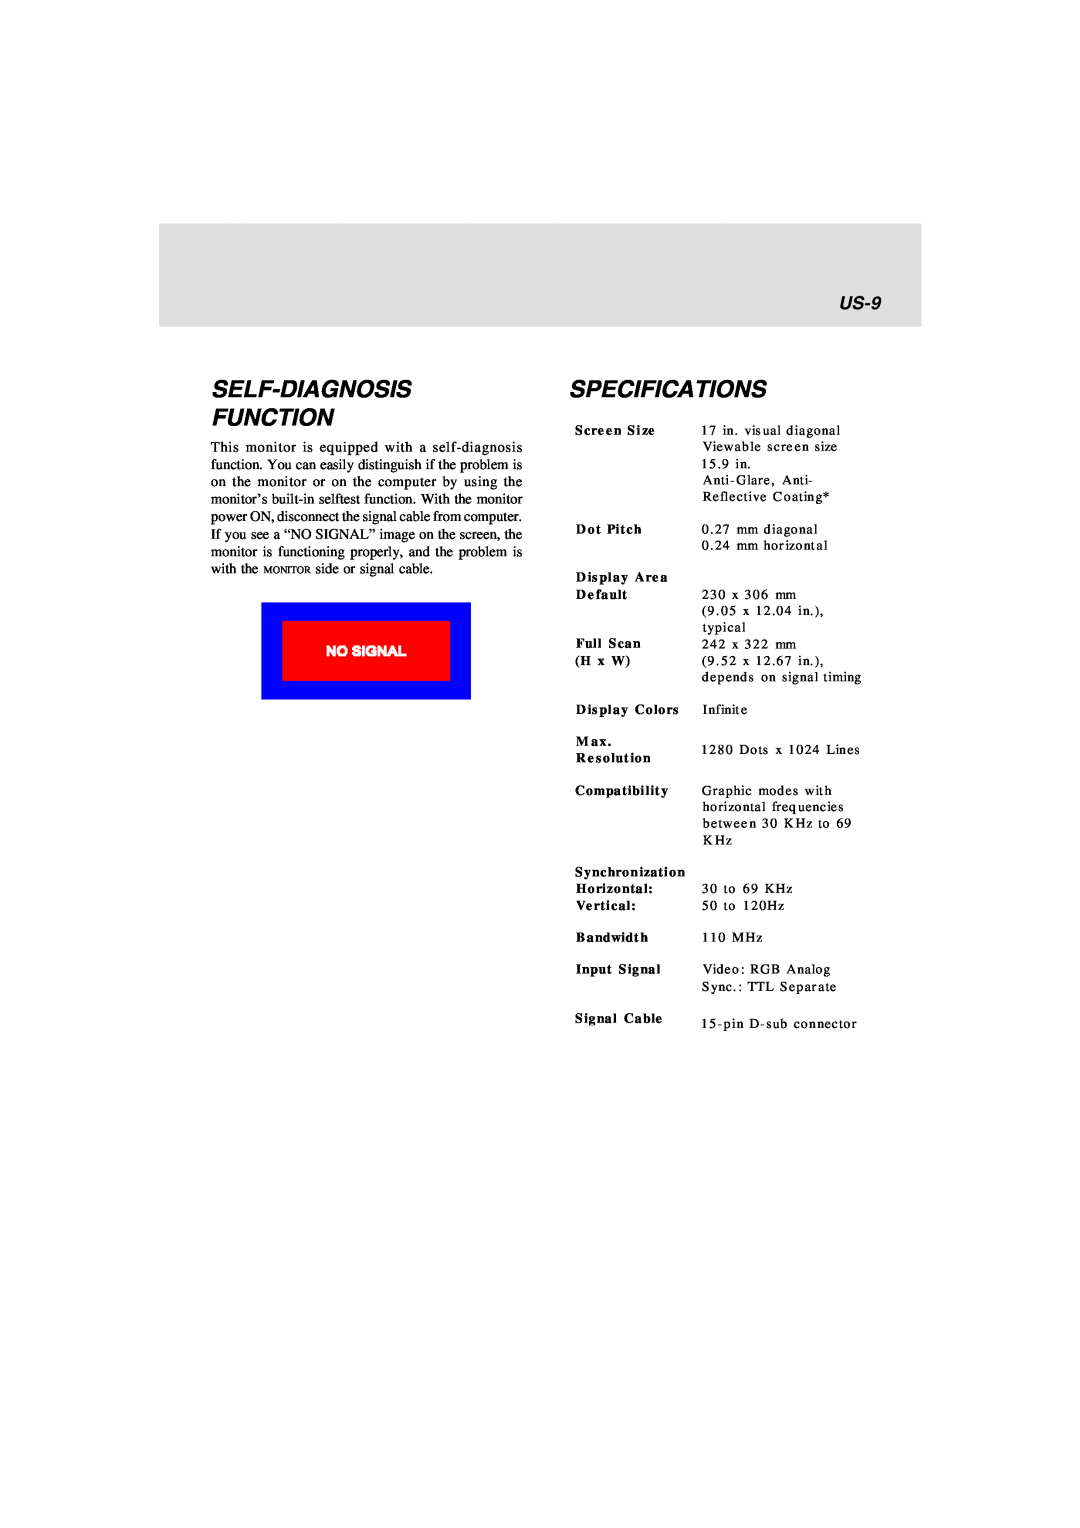 Lenovo E74 manual Self-Diagnosis Function, Specifications, US-9 